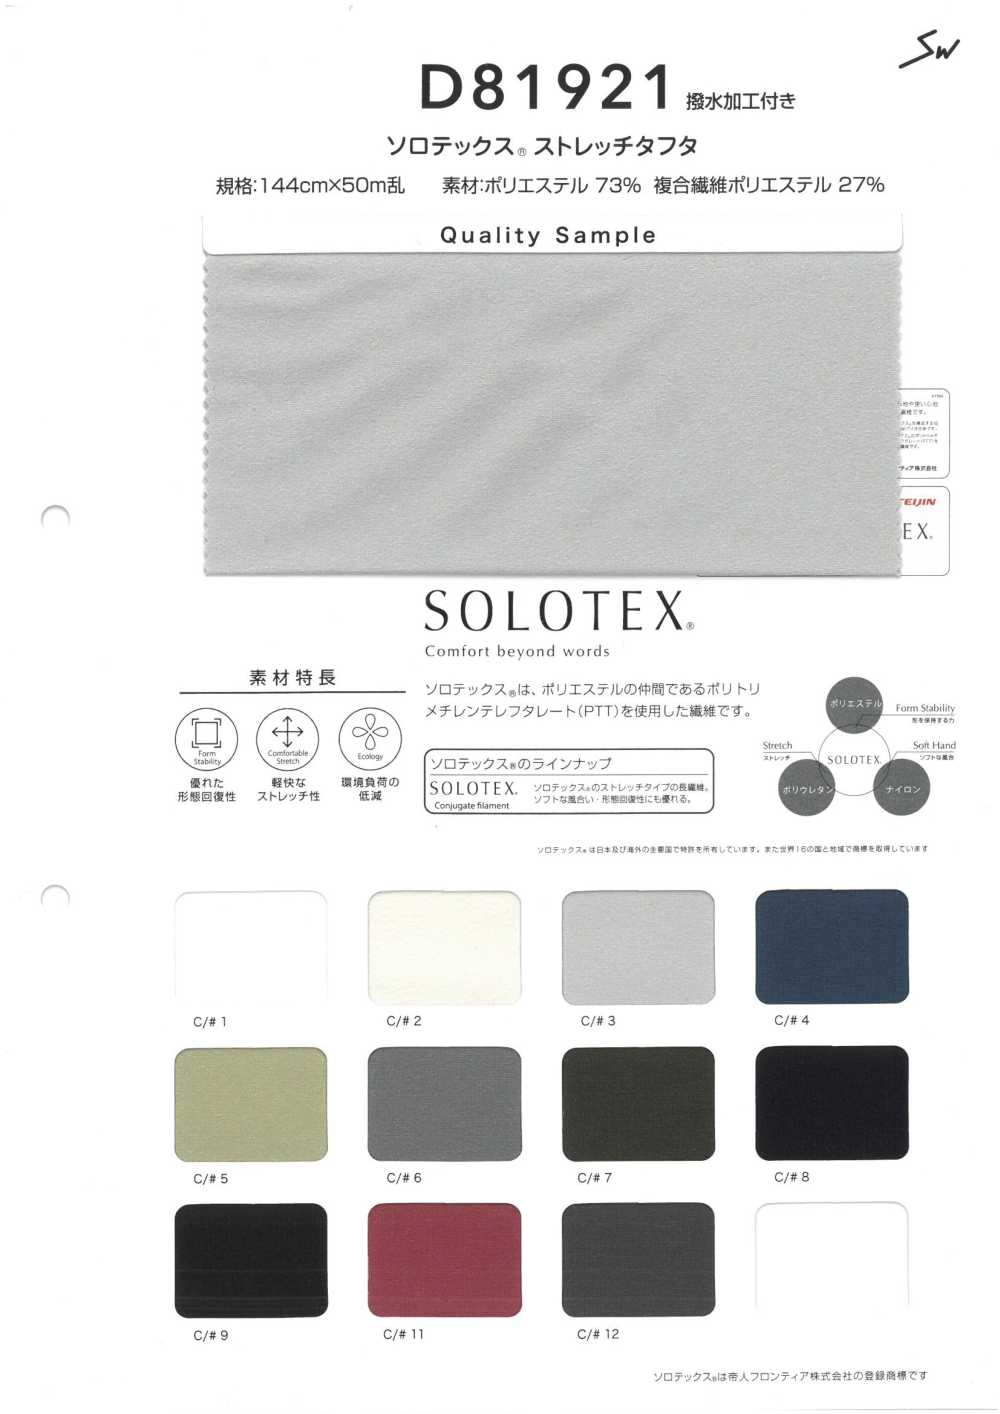 D81921 Solotex[Textilgewebe] Sanwa Fasern